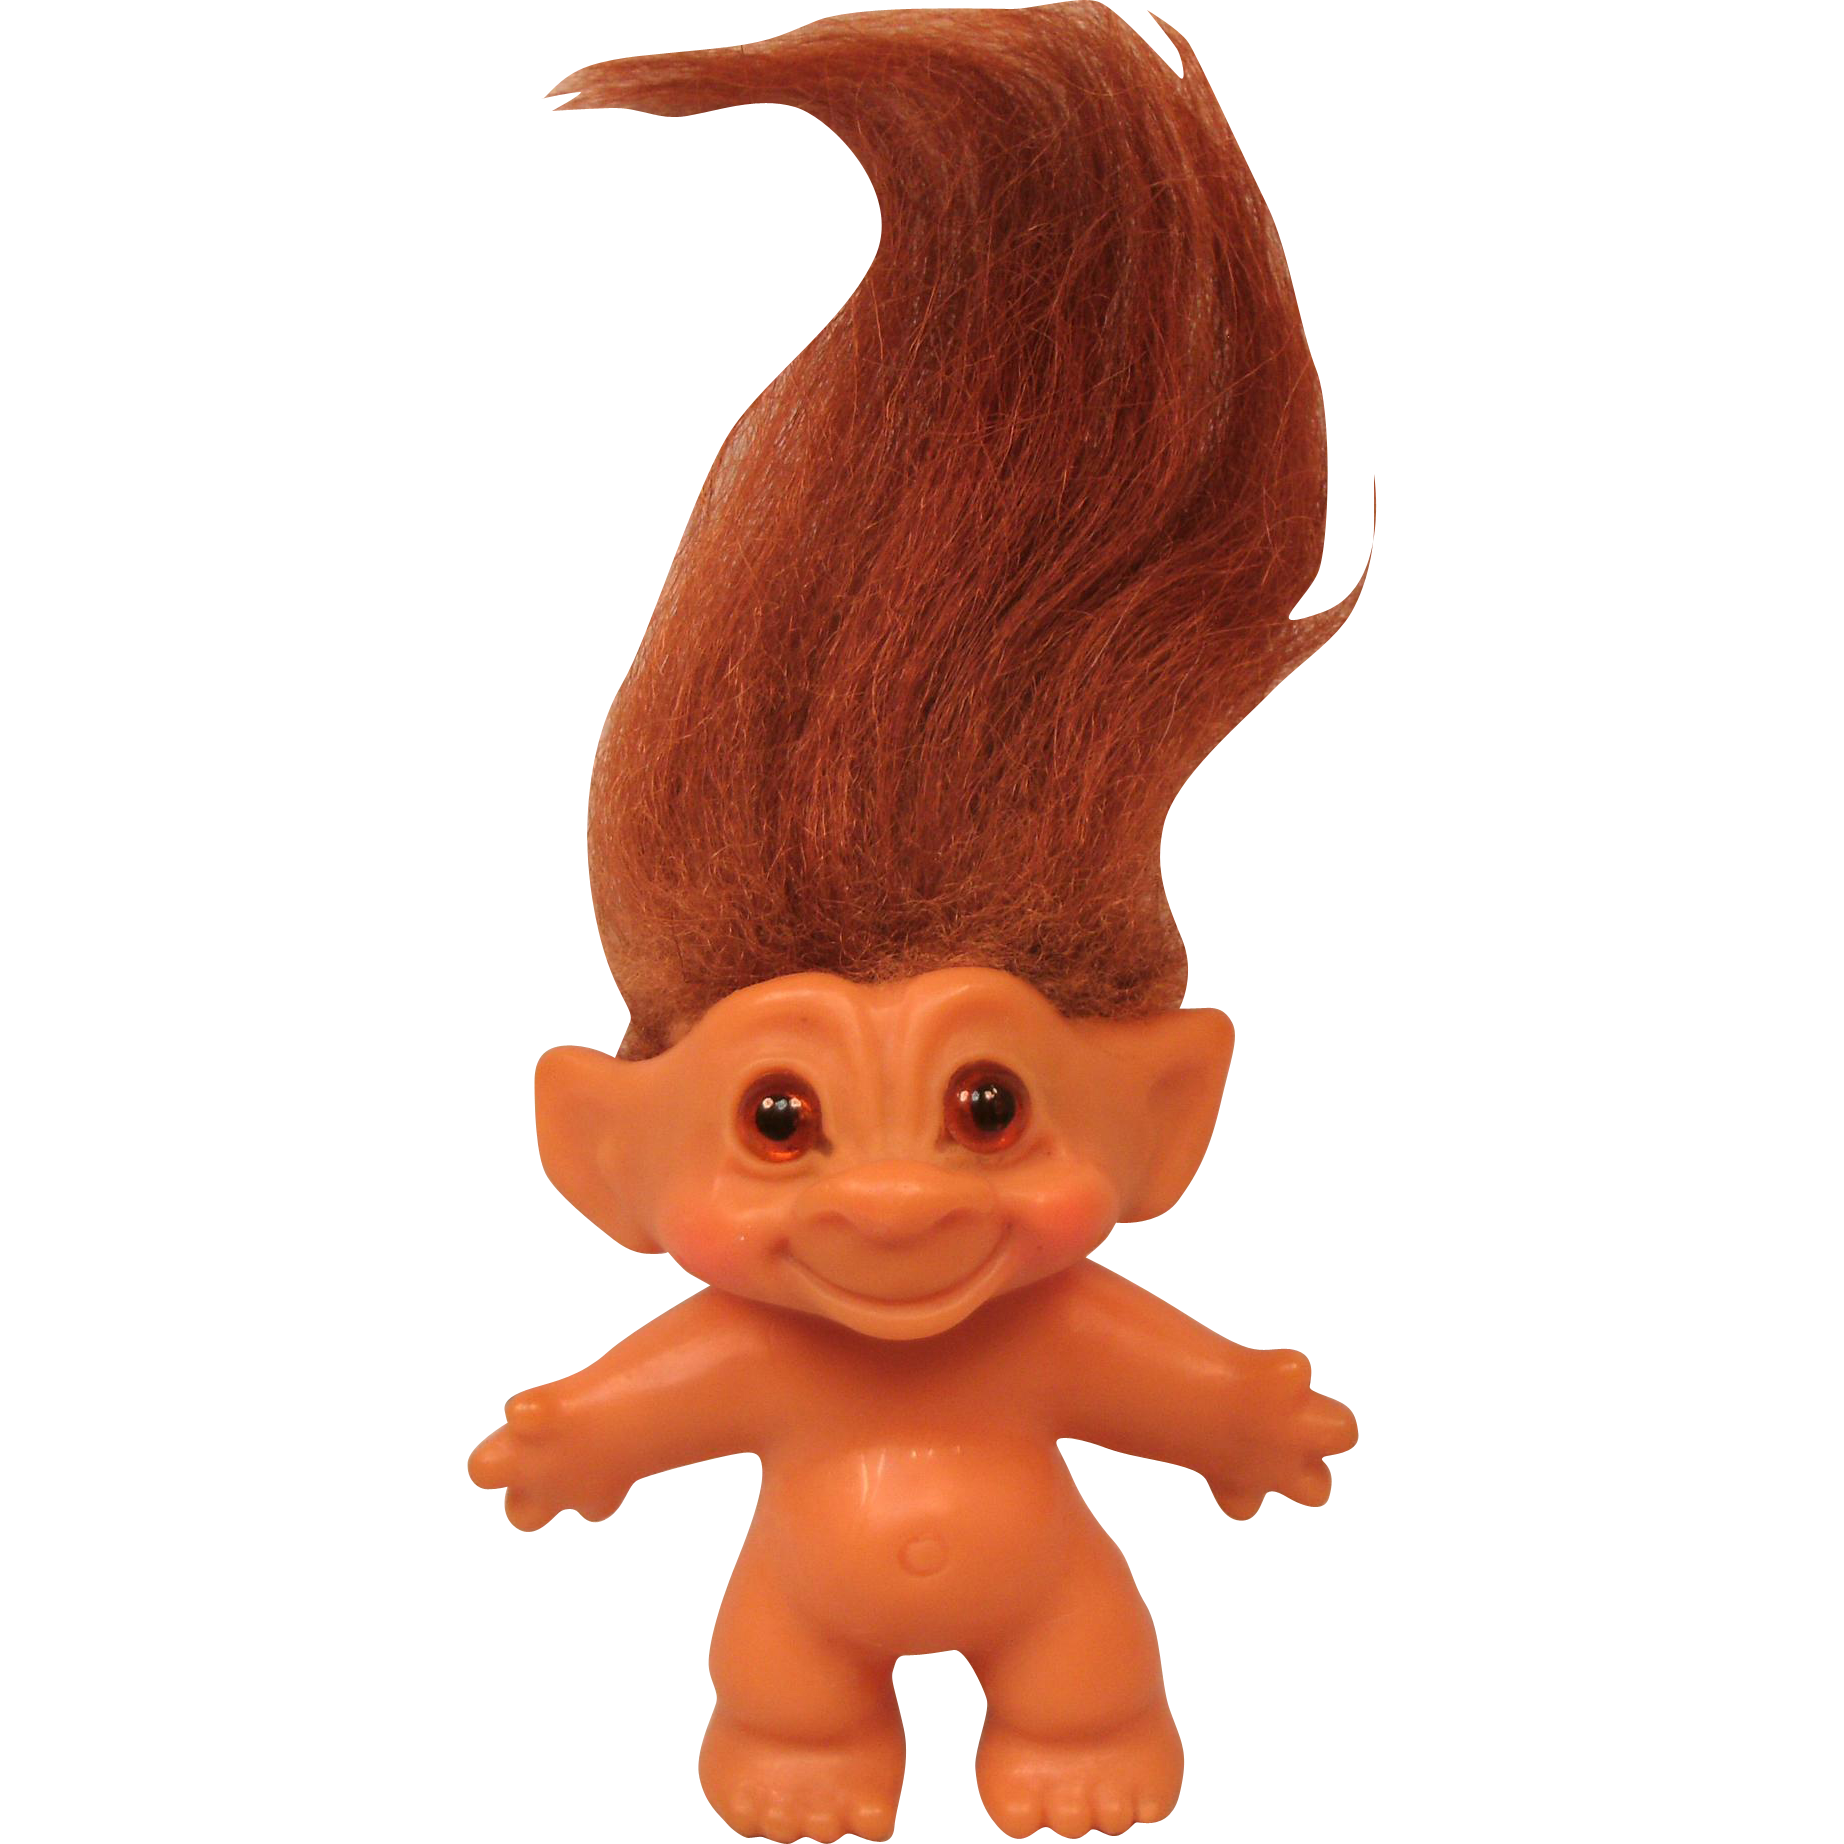 Troll Doll Png - Free Logo Image